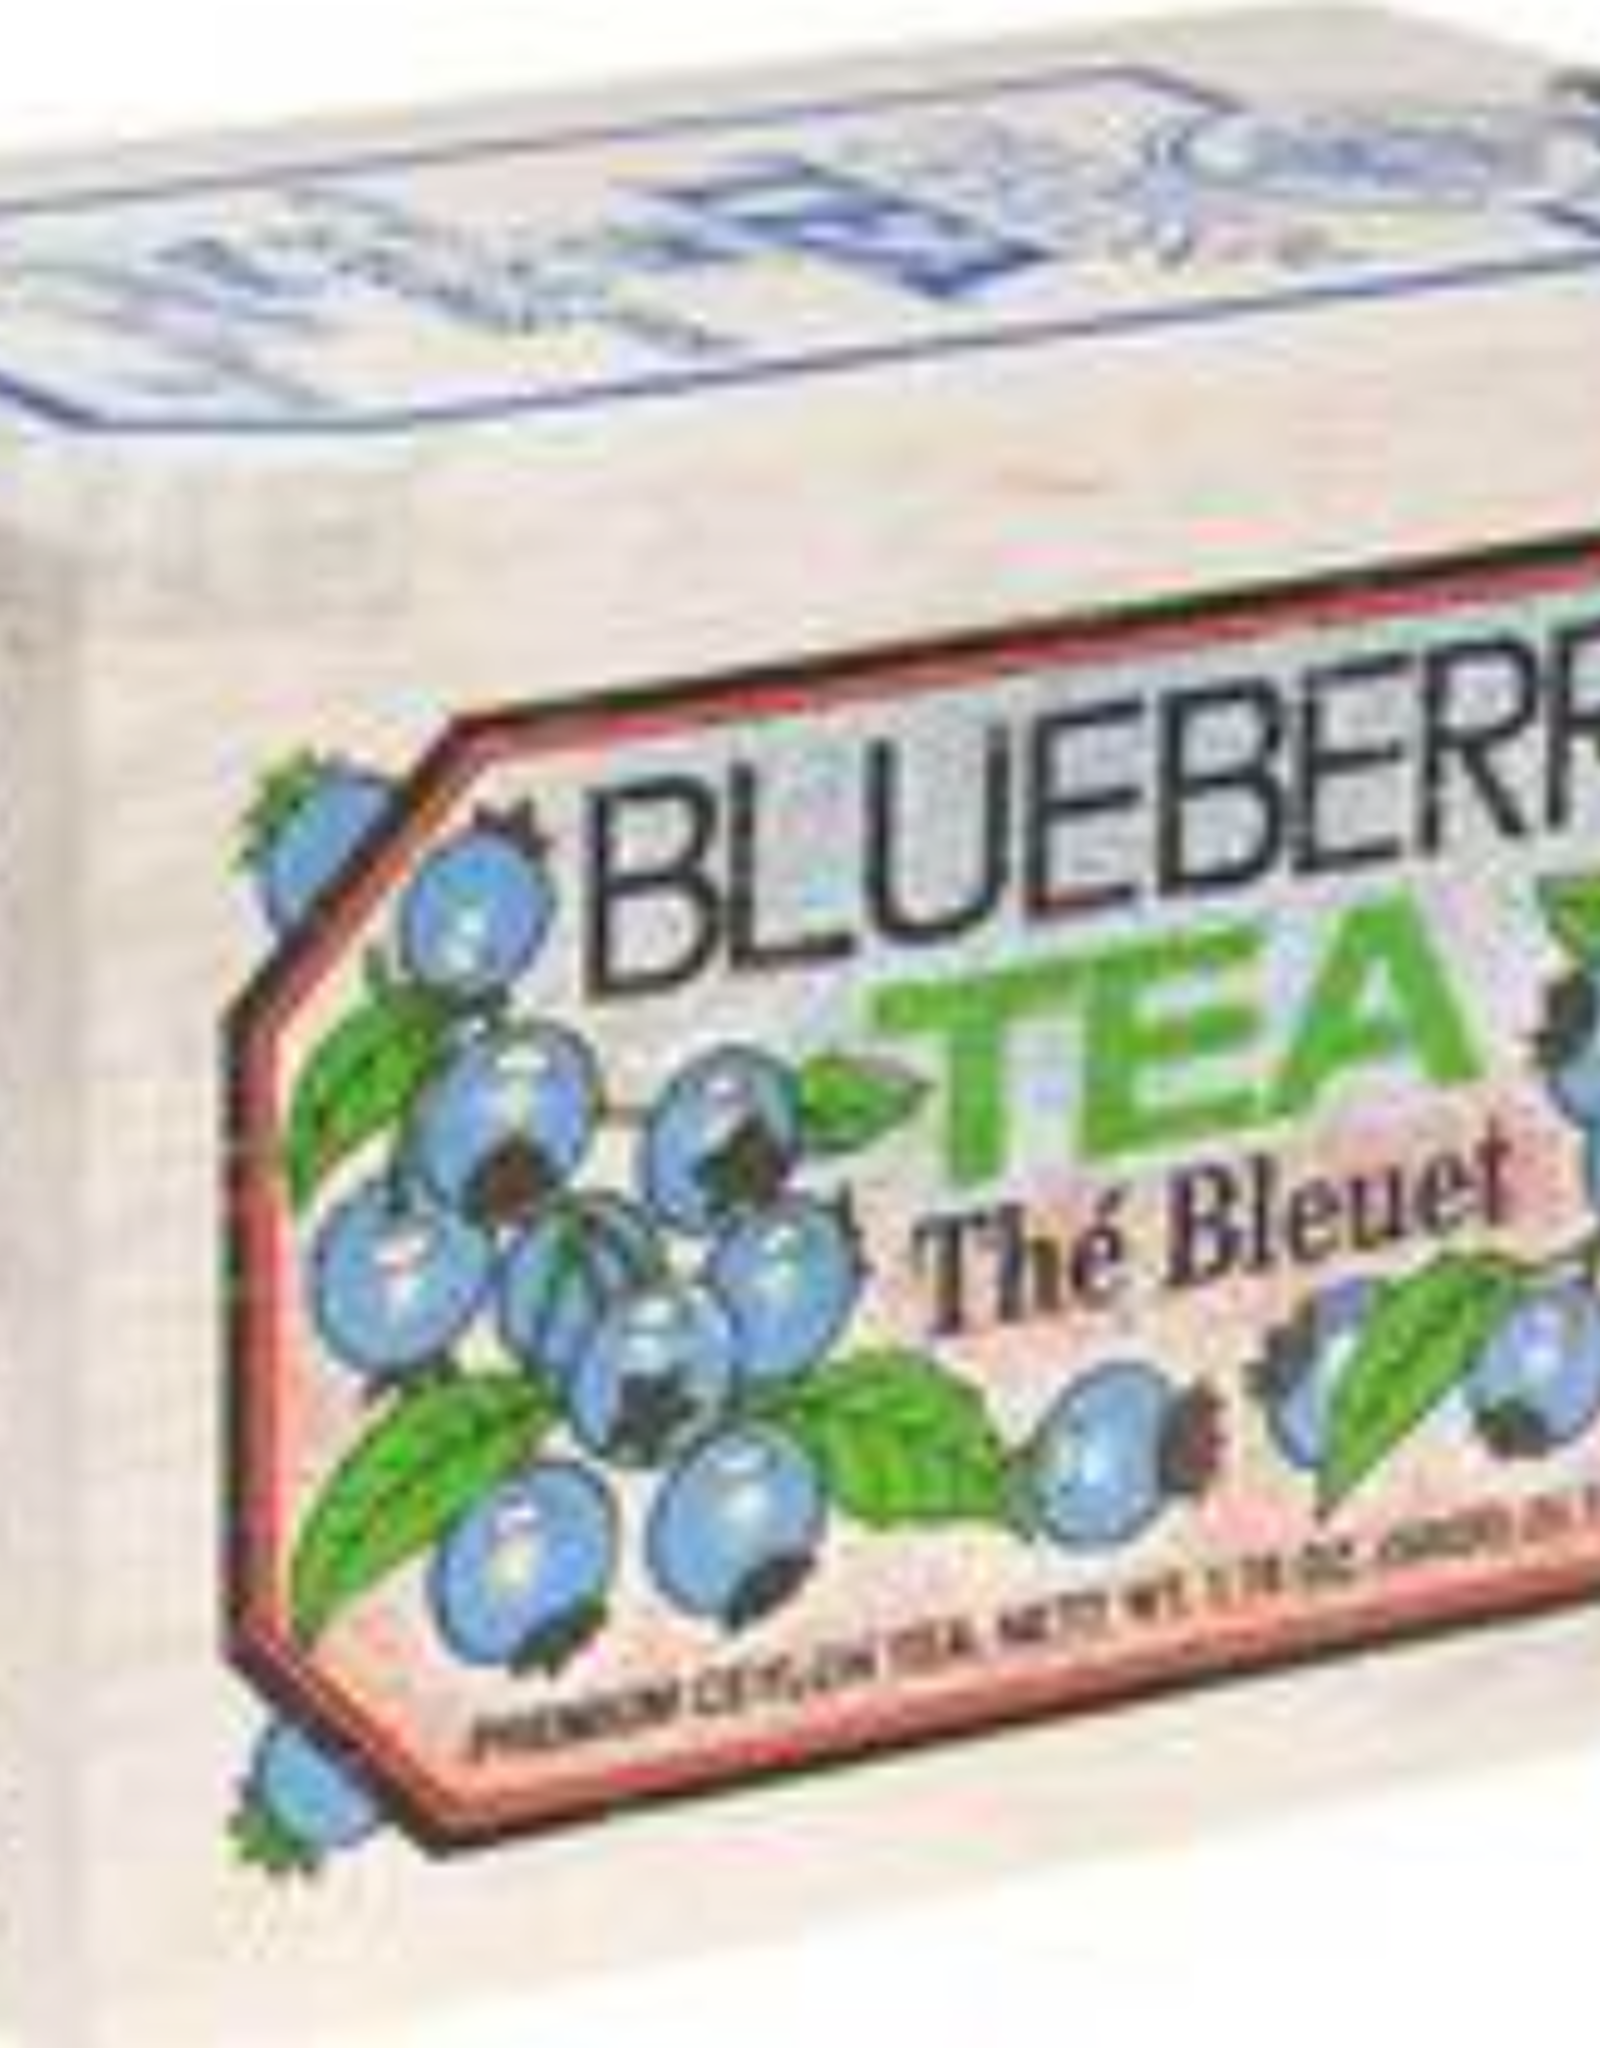 Food & Beverage Metropolitan - Blueberry Tea